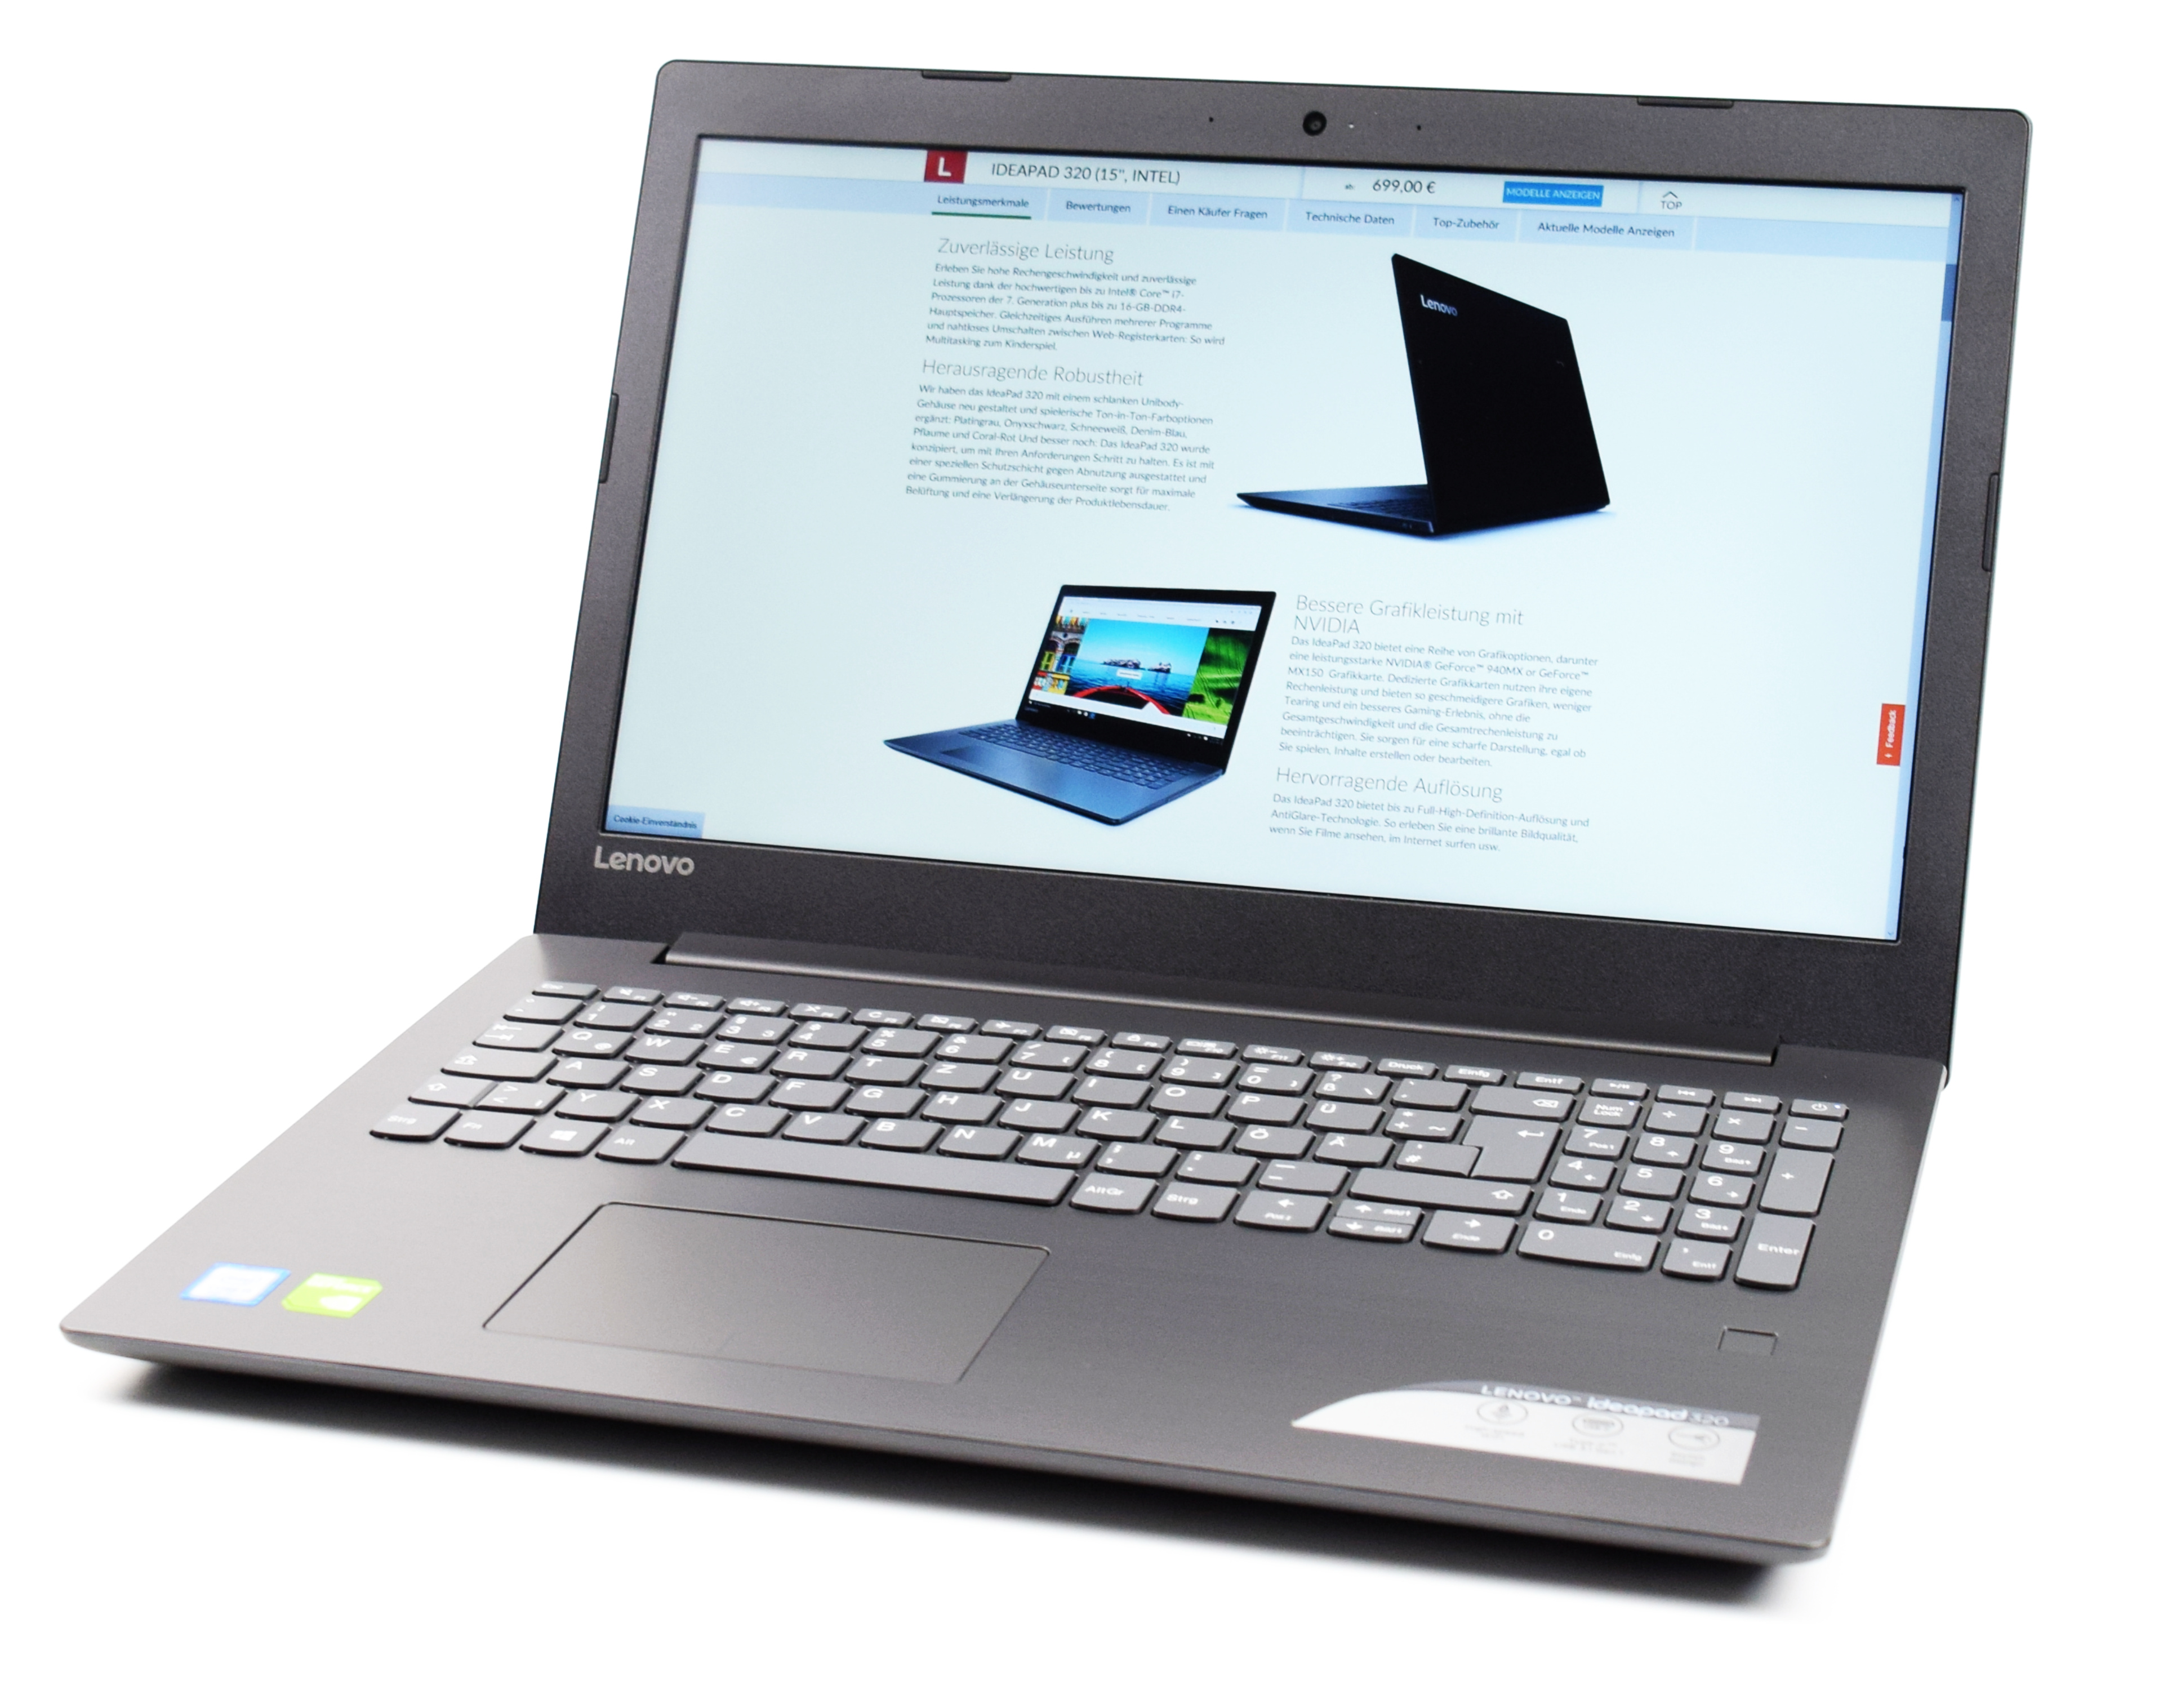 Lenovo IdeaPad 320-15IKBRN (8250U, FHD) Laptop Review -